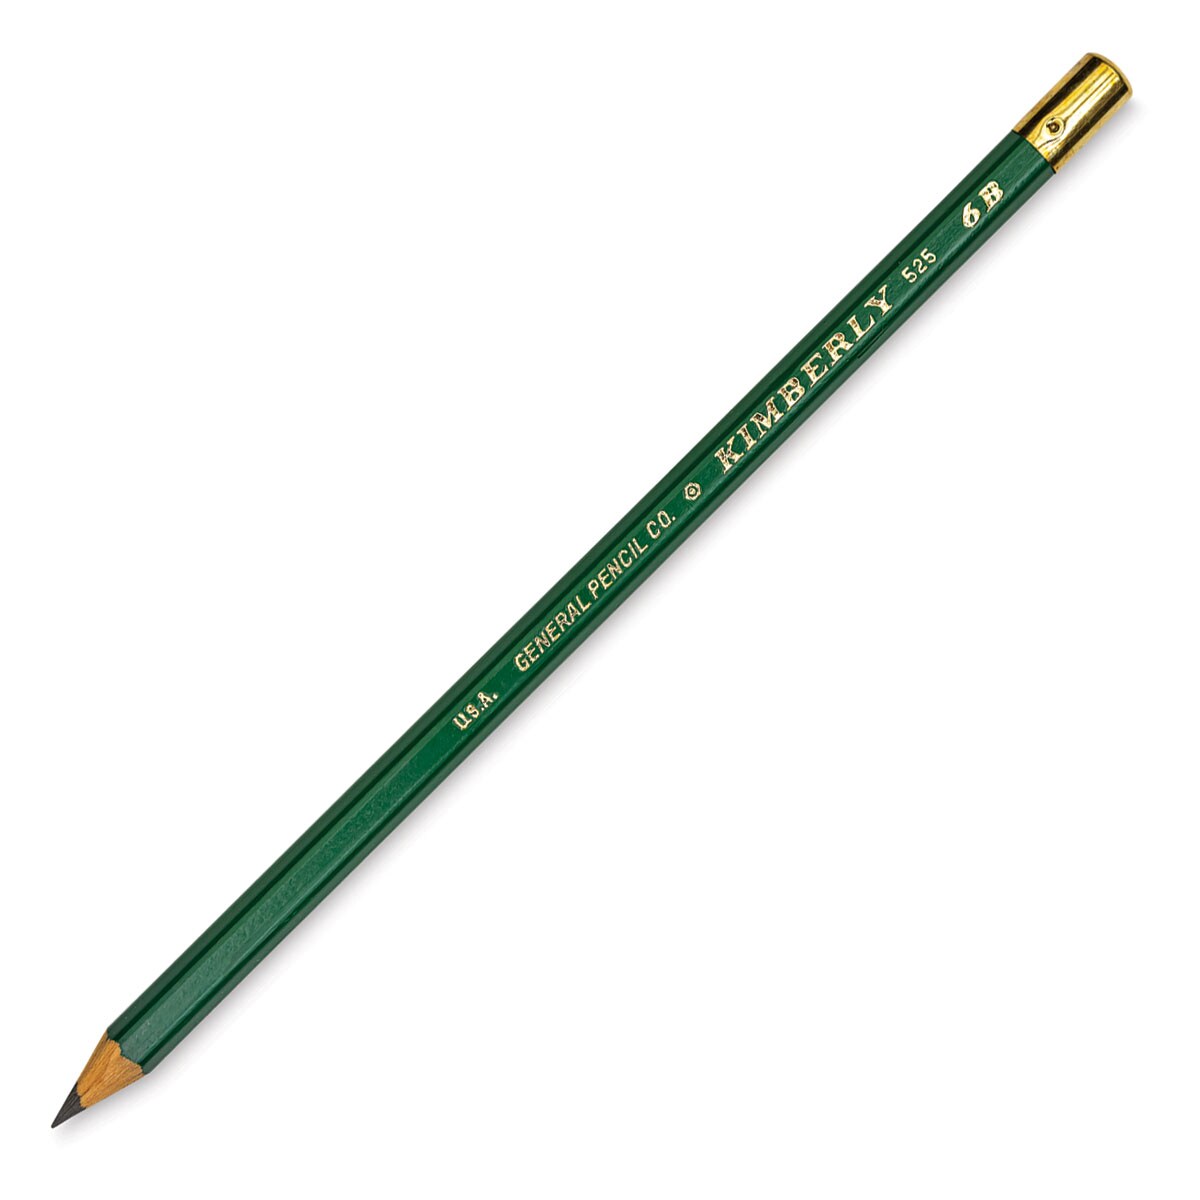 General's Kimberly Drawing Pencil 6b